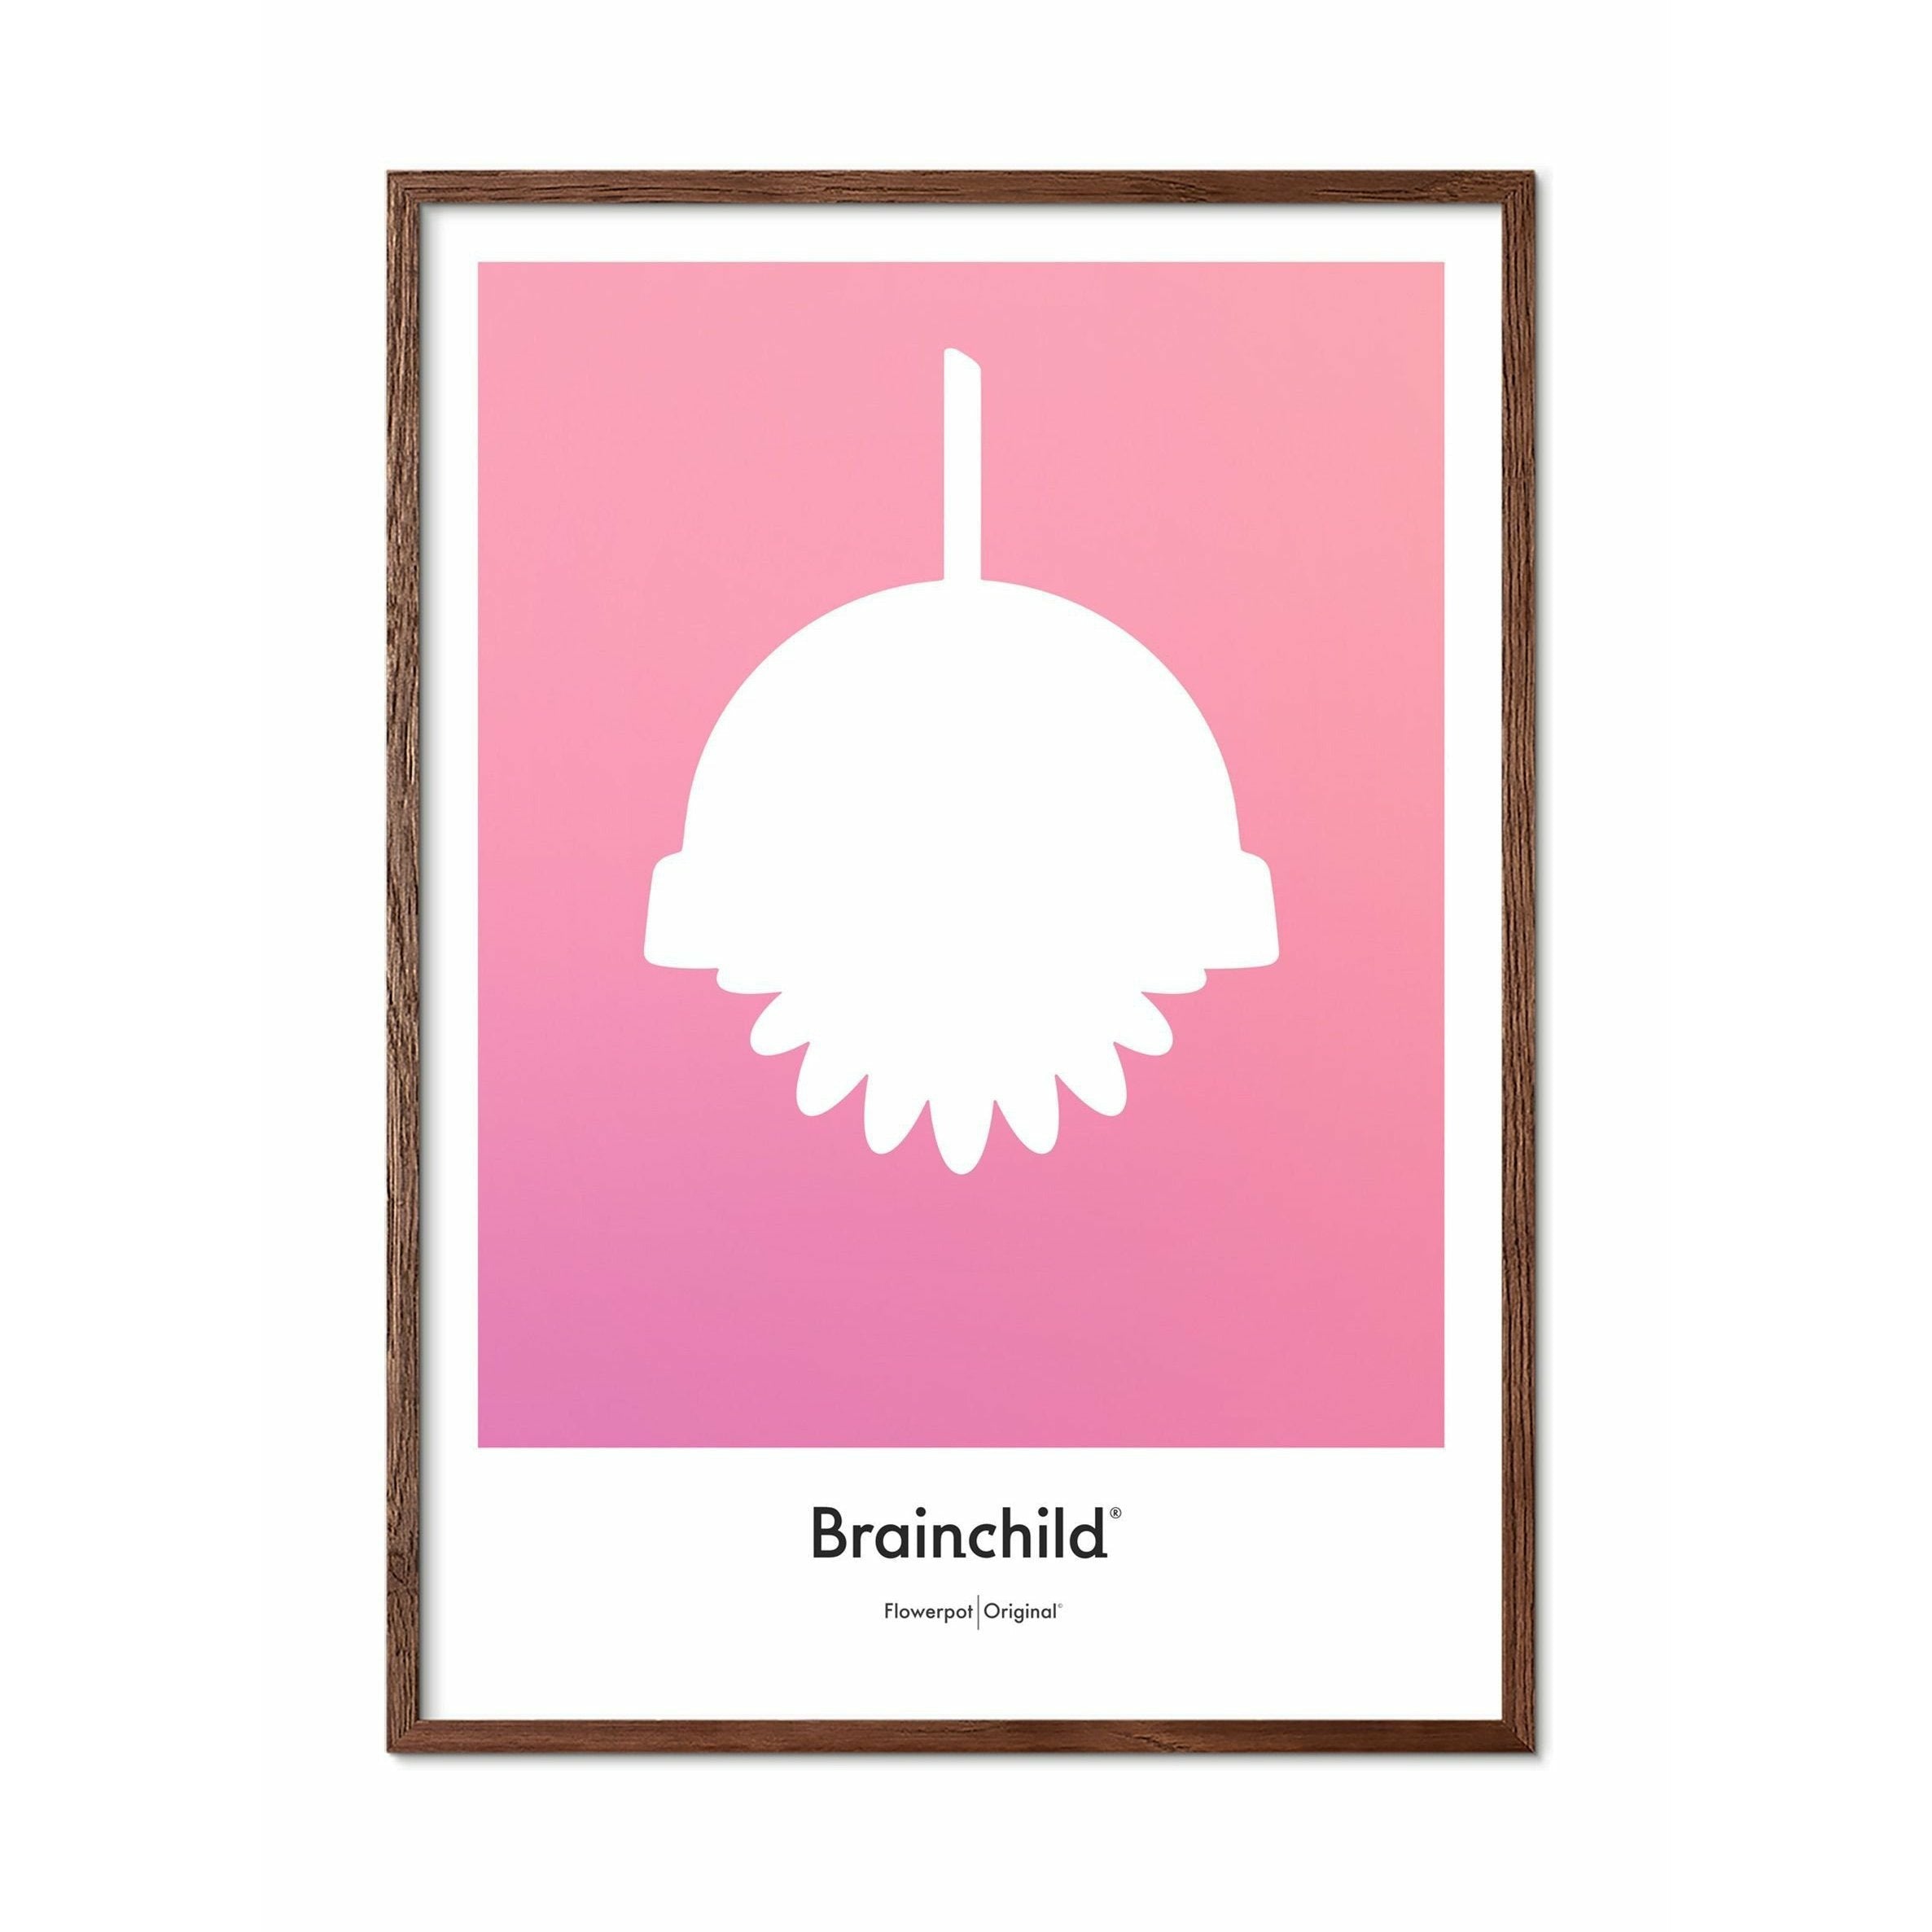 Brainchild Flowerpot Designikon Plakat, Ramme I Mørkt Træ 30X40 Cm, Rosa